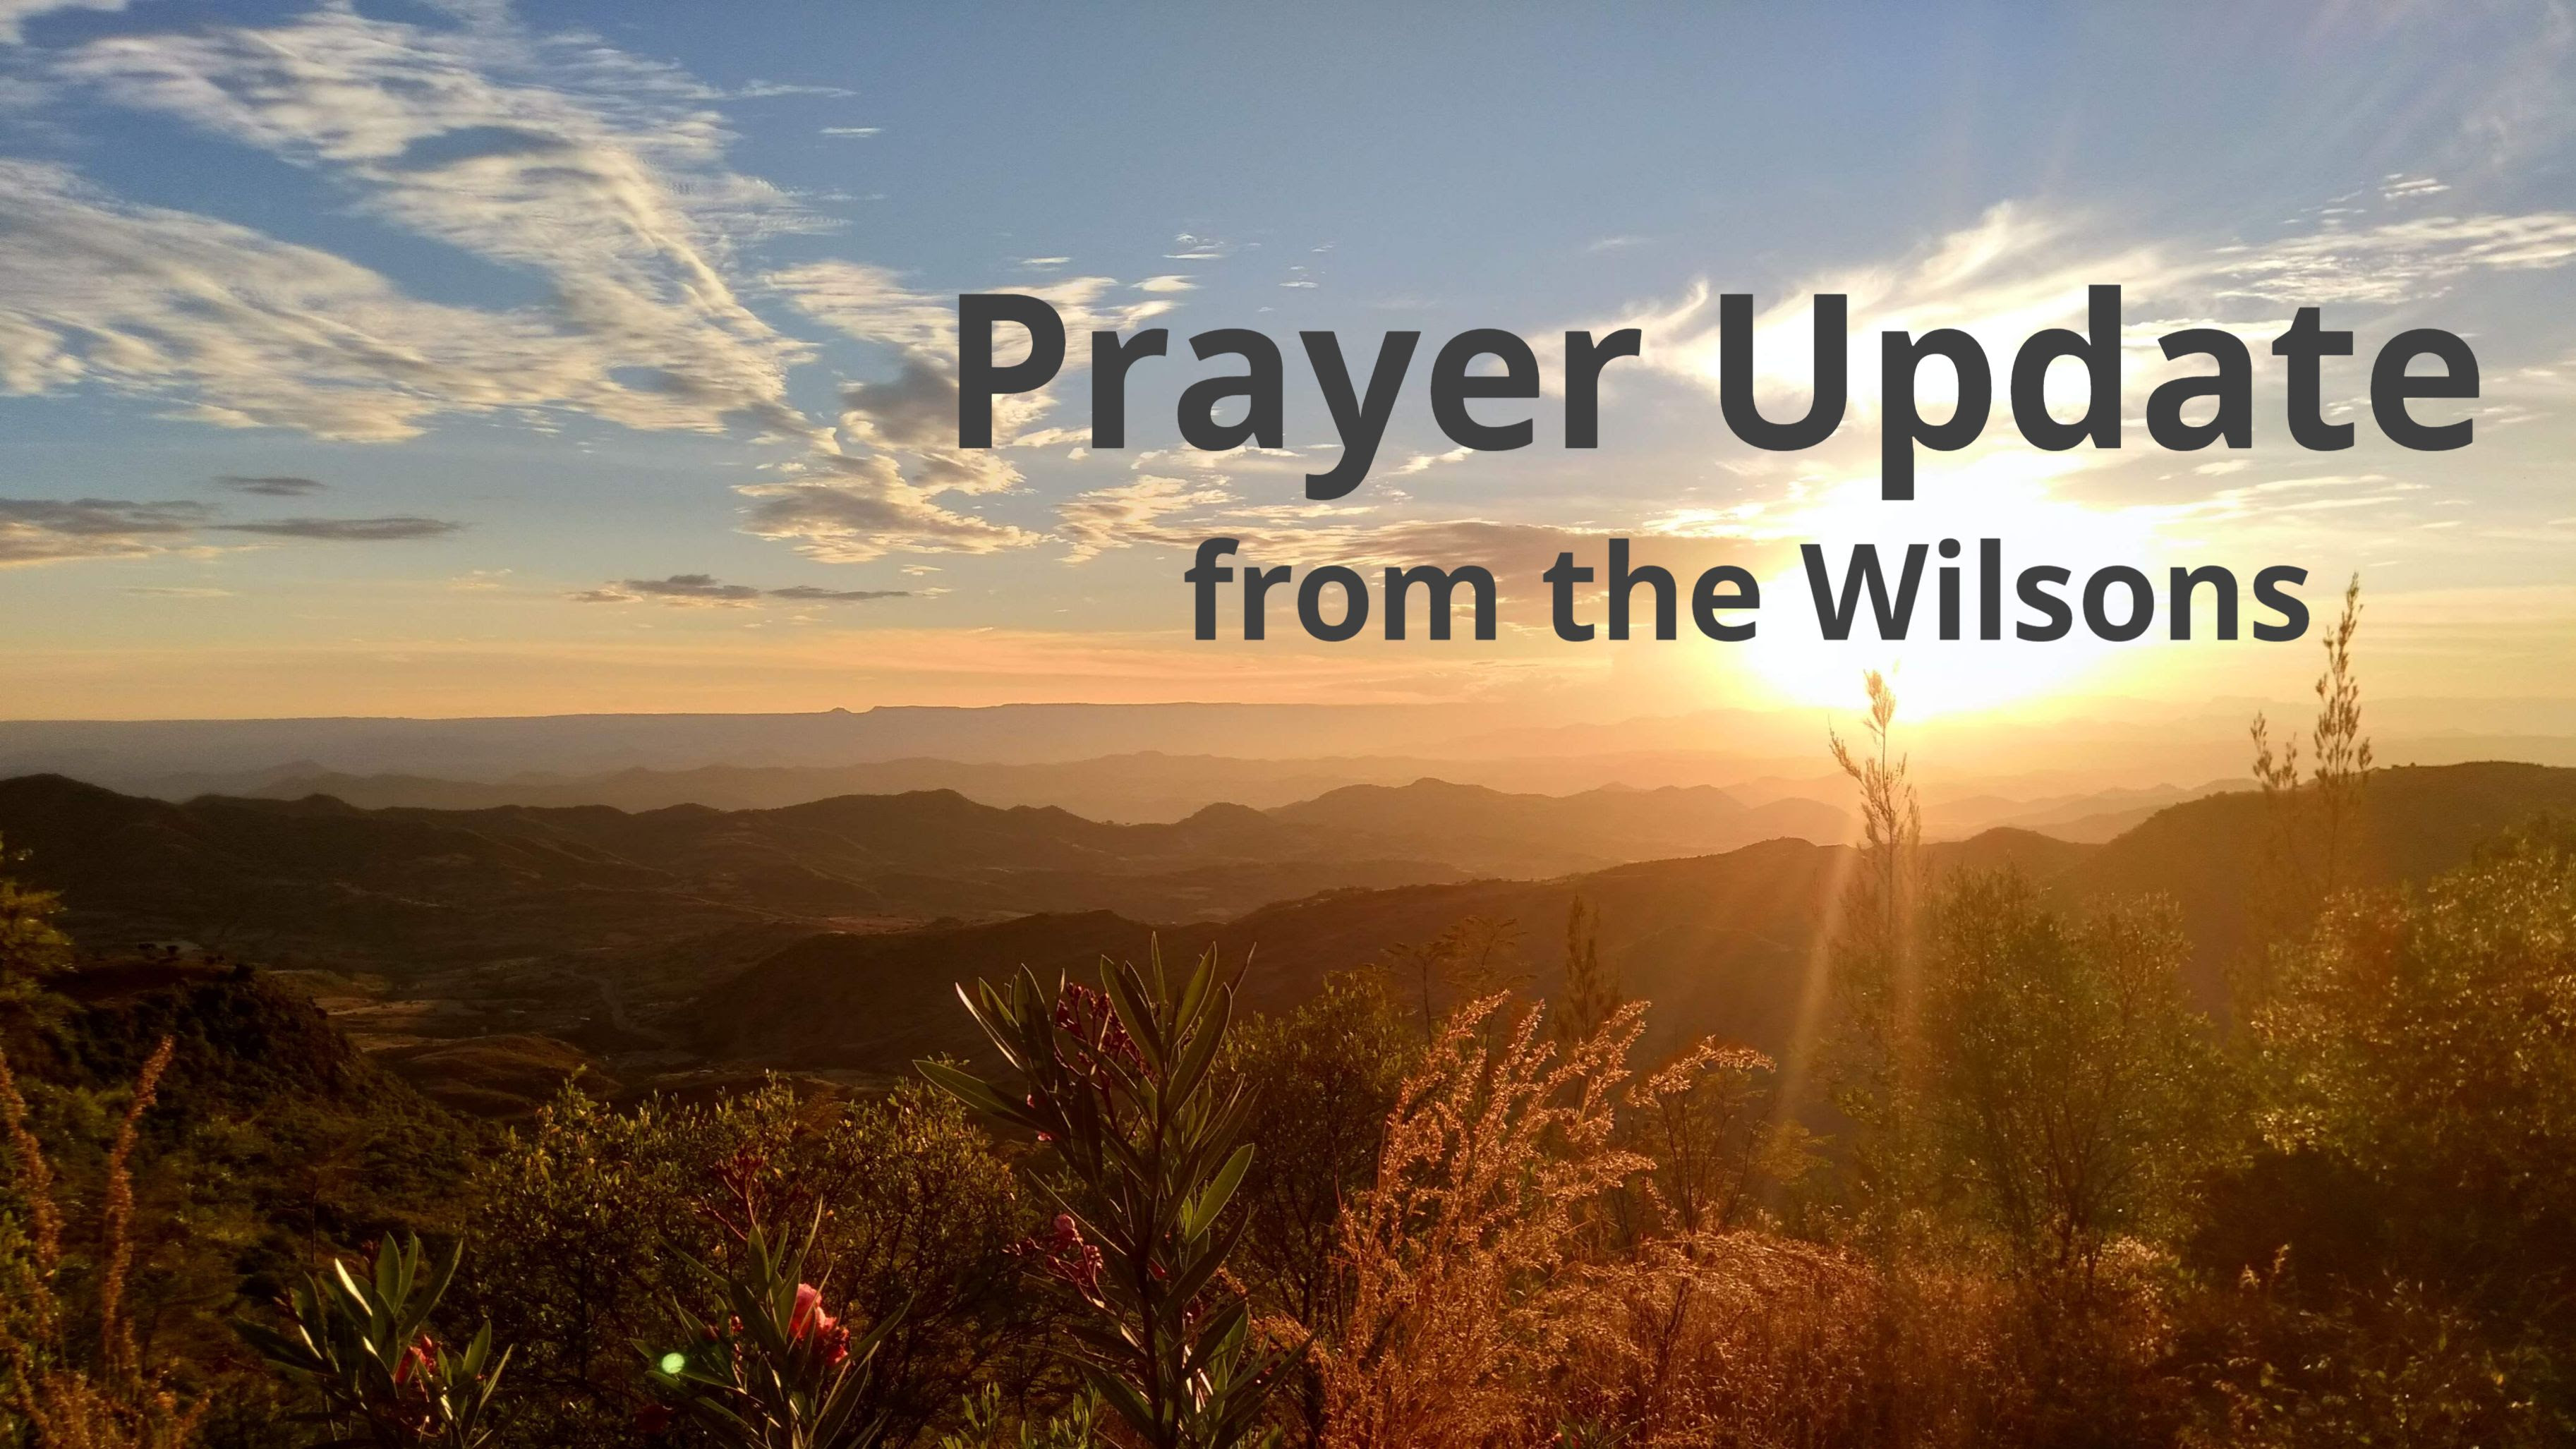 Prayer update from the Wilsons